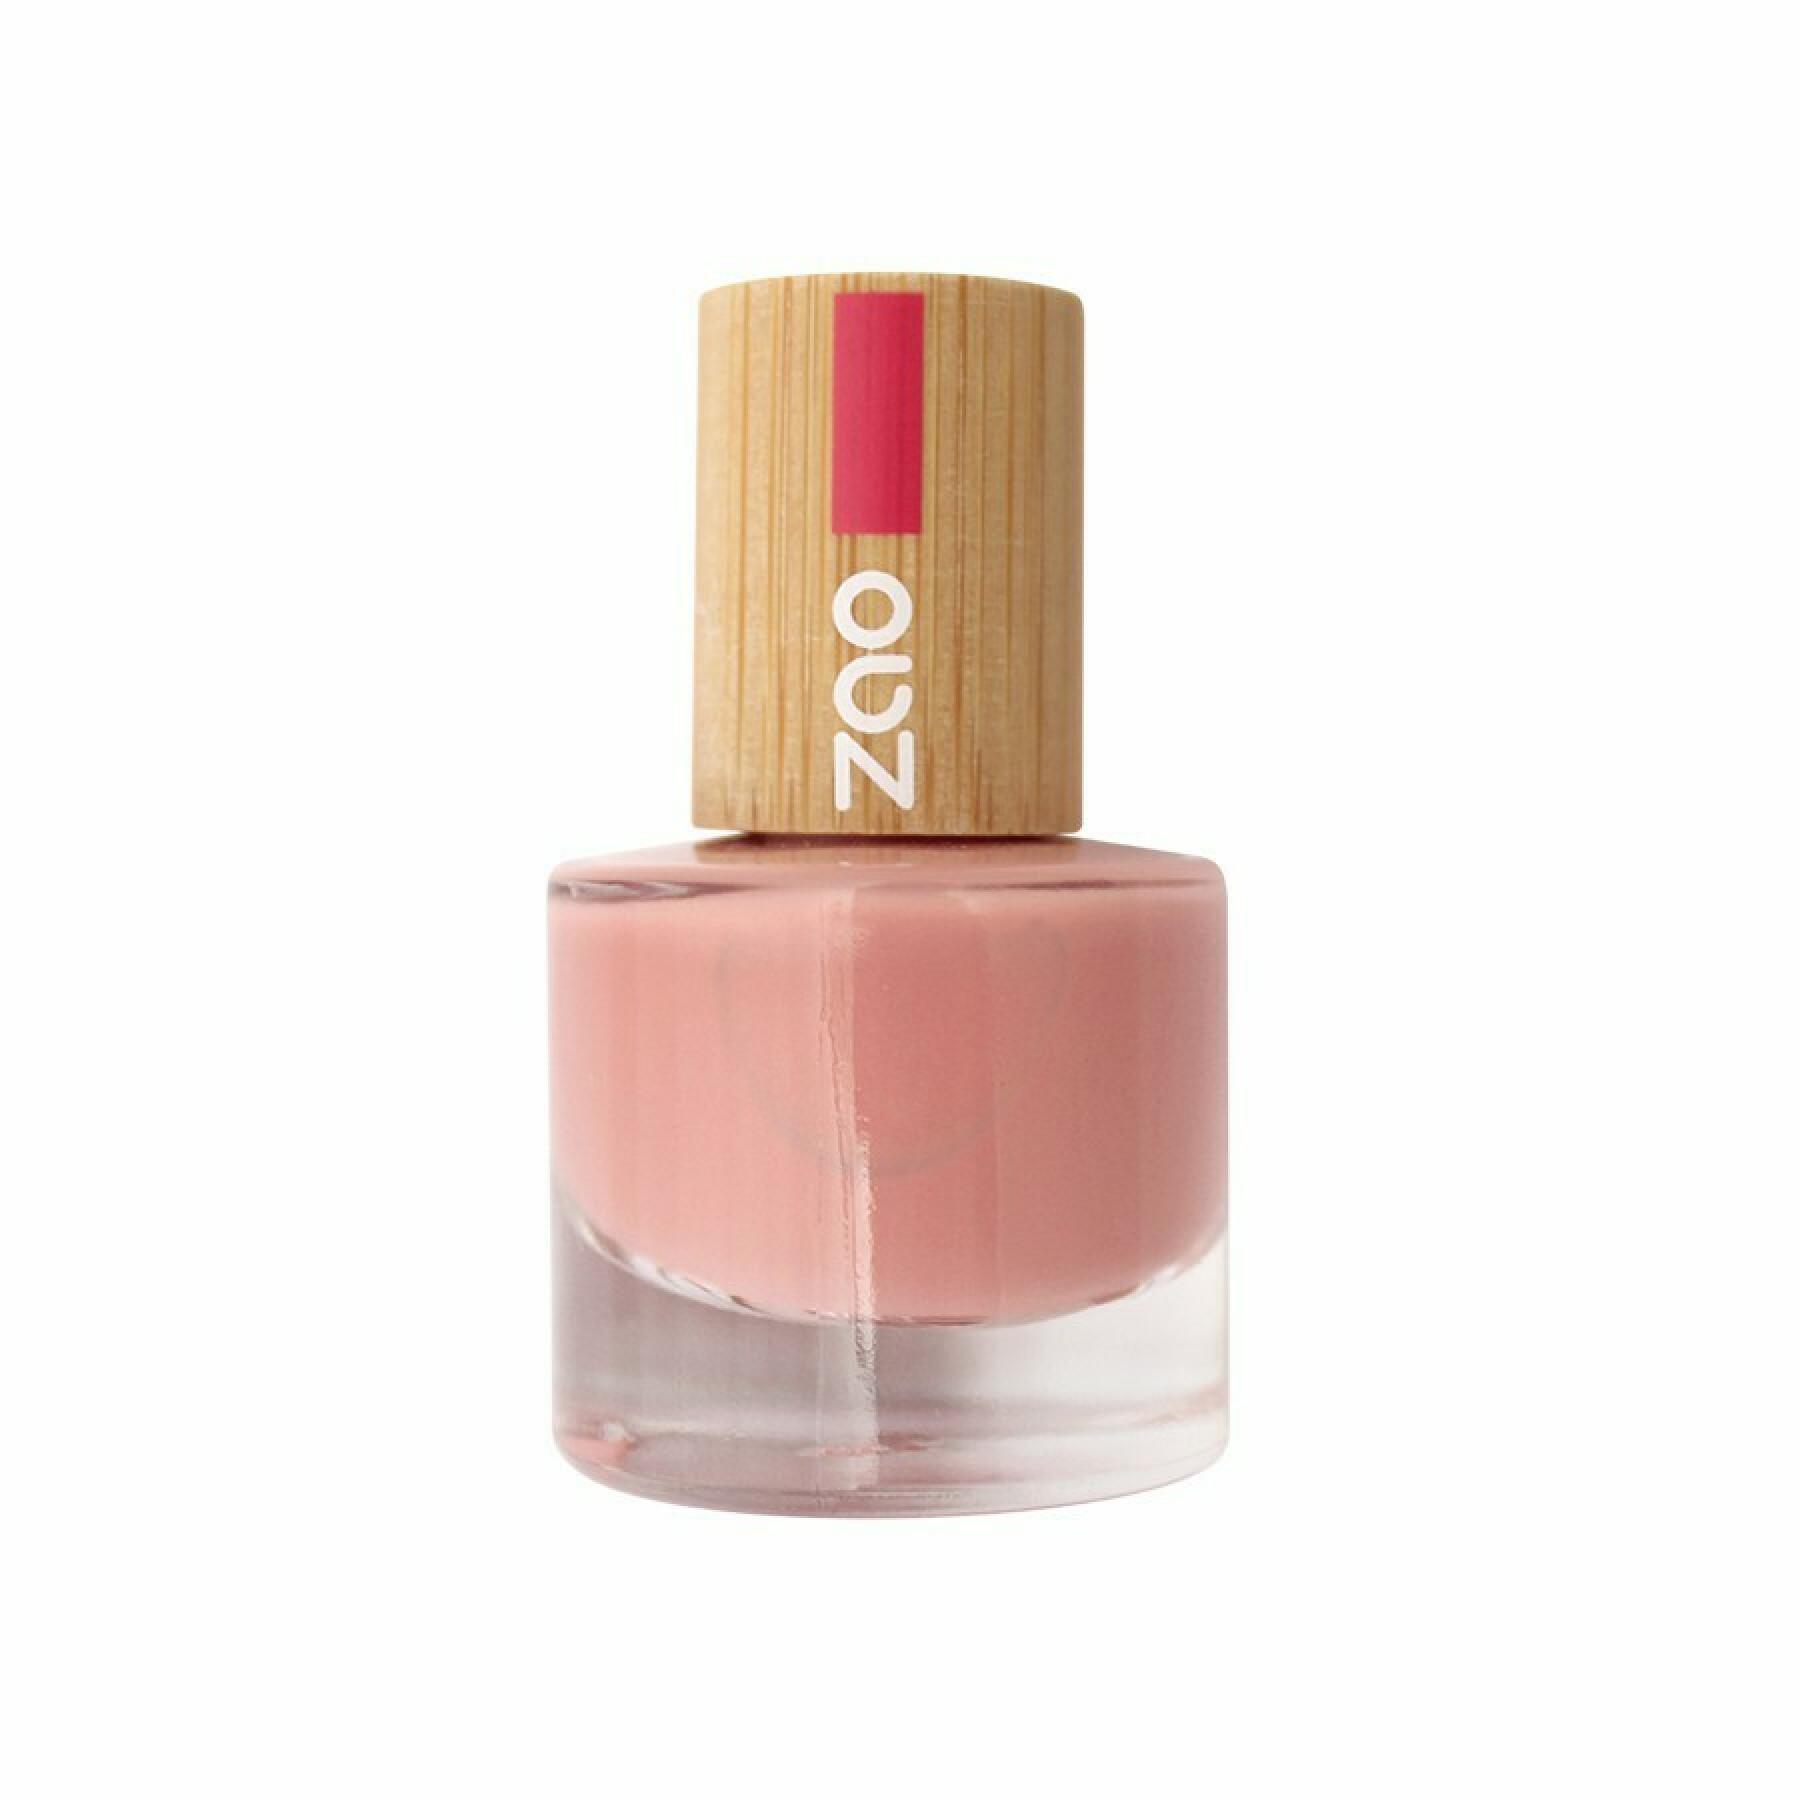 Nail polish 662 powder pink woman Zao - 8 ml